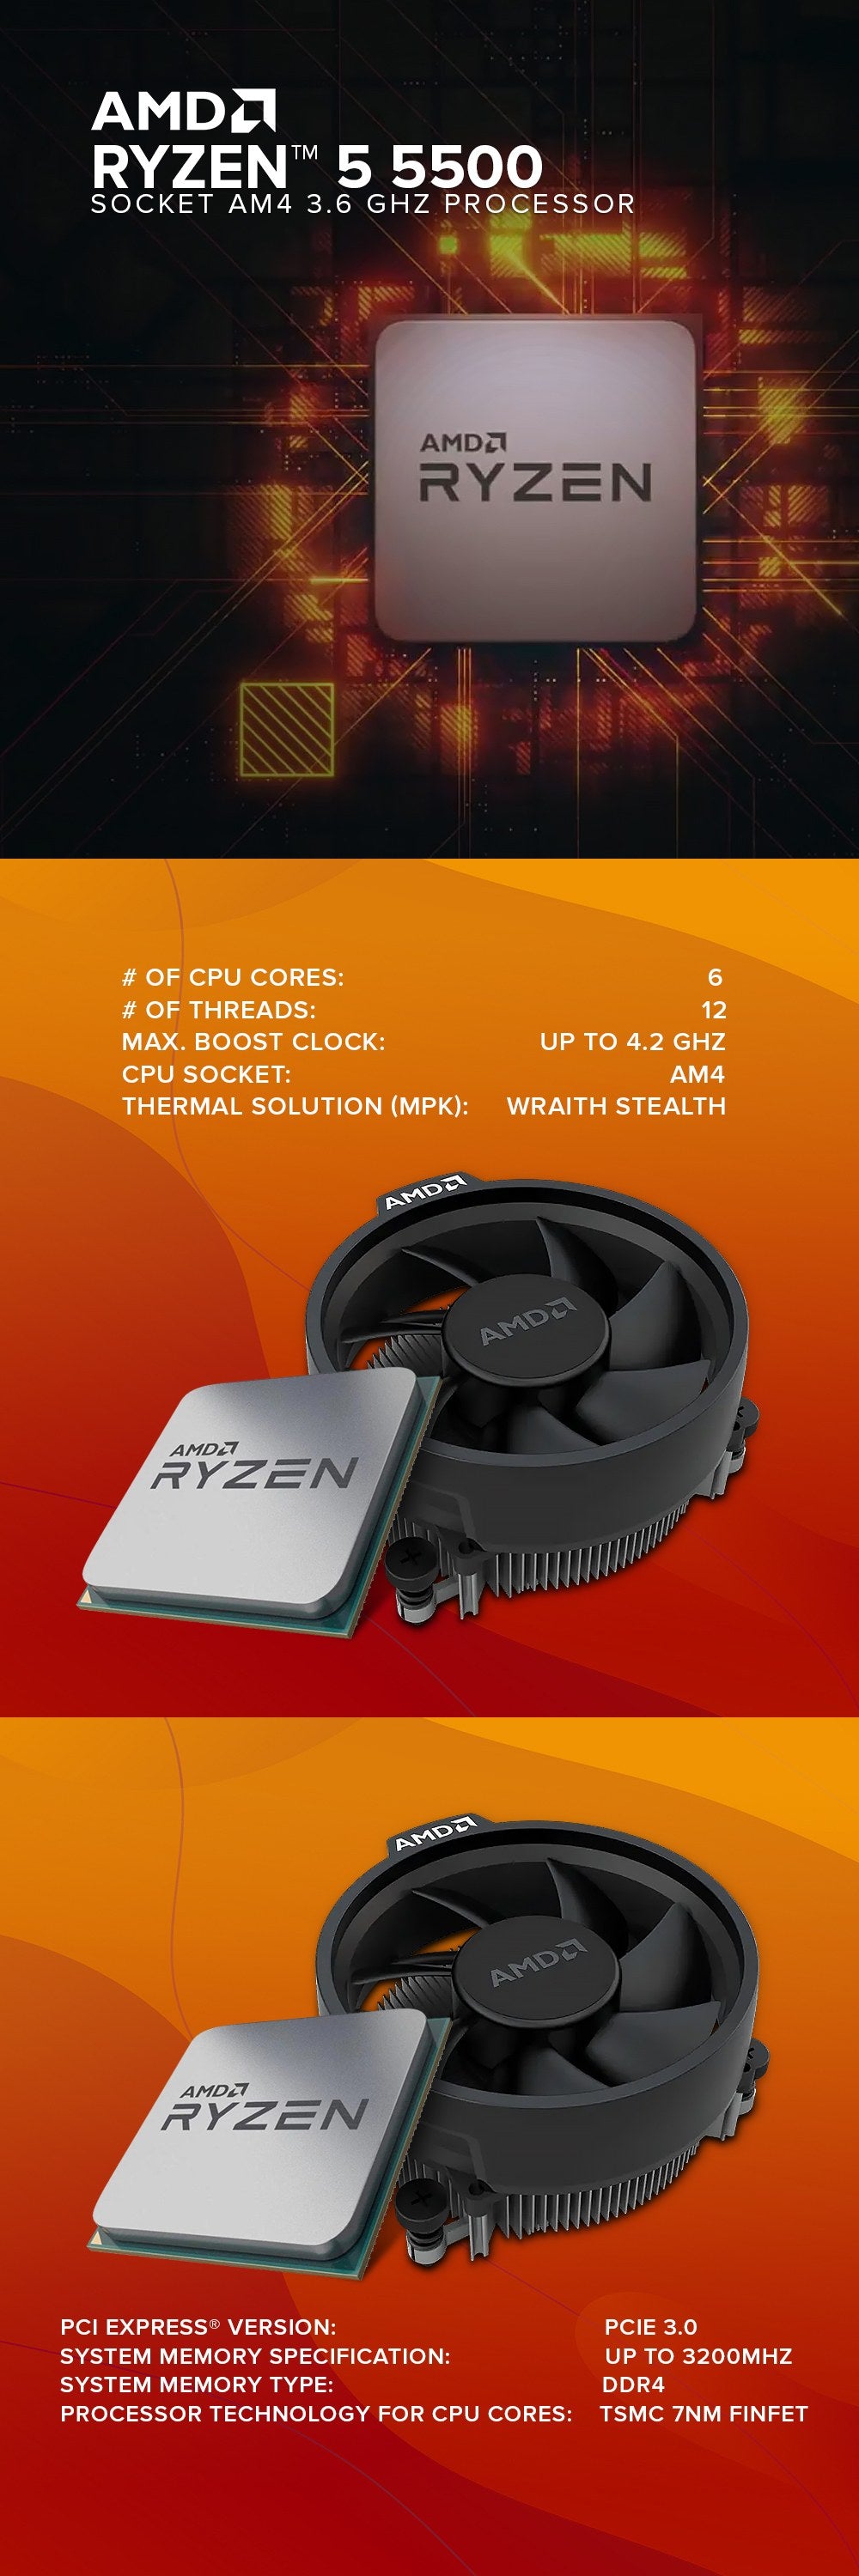 AMD Ryzen 5 5600 and 5500 Gaming Benchmarks - AMD Ryzen 5 5600 and